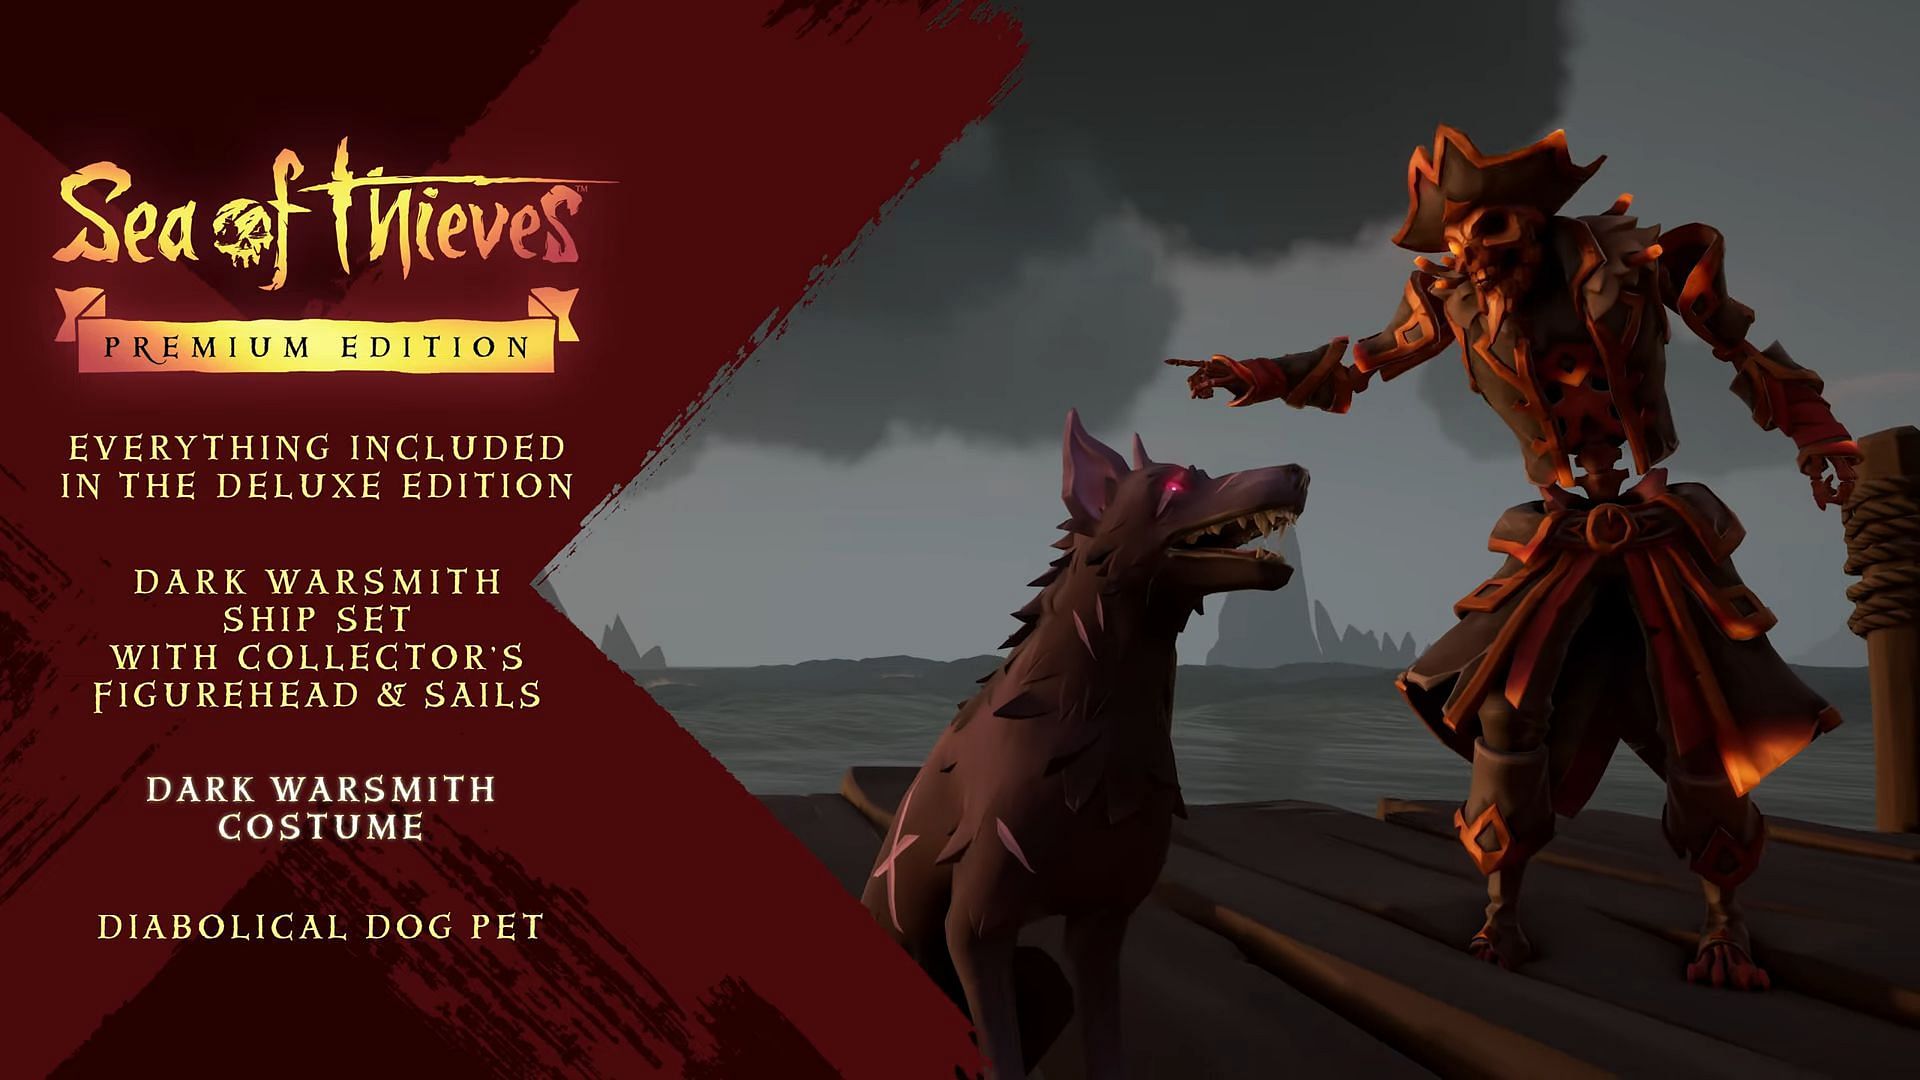 Dark Warsmith Costume and Diabolical Dog Pet in Sea of Thieves Premium Edition (Image via Xbox Game Studios)